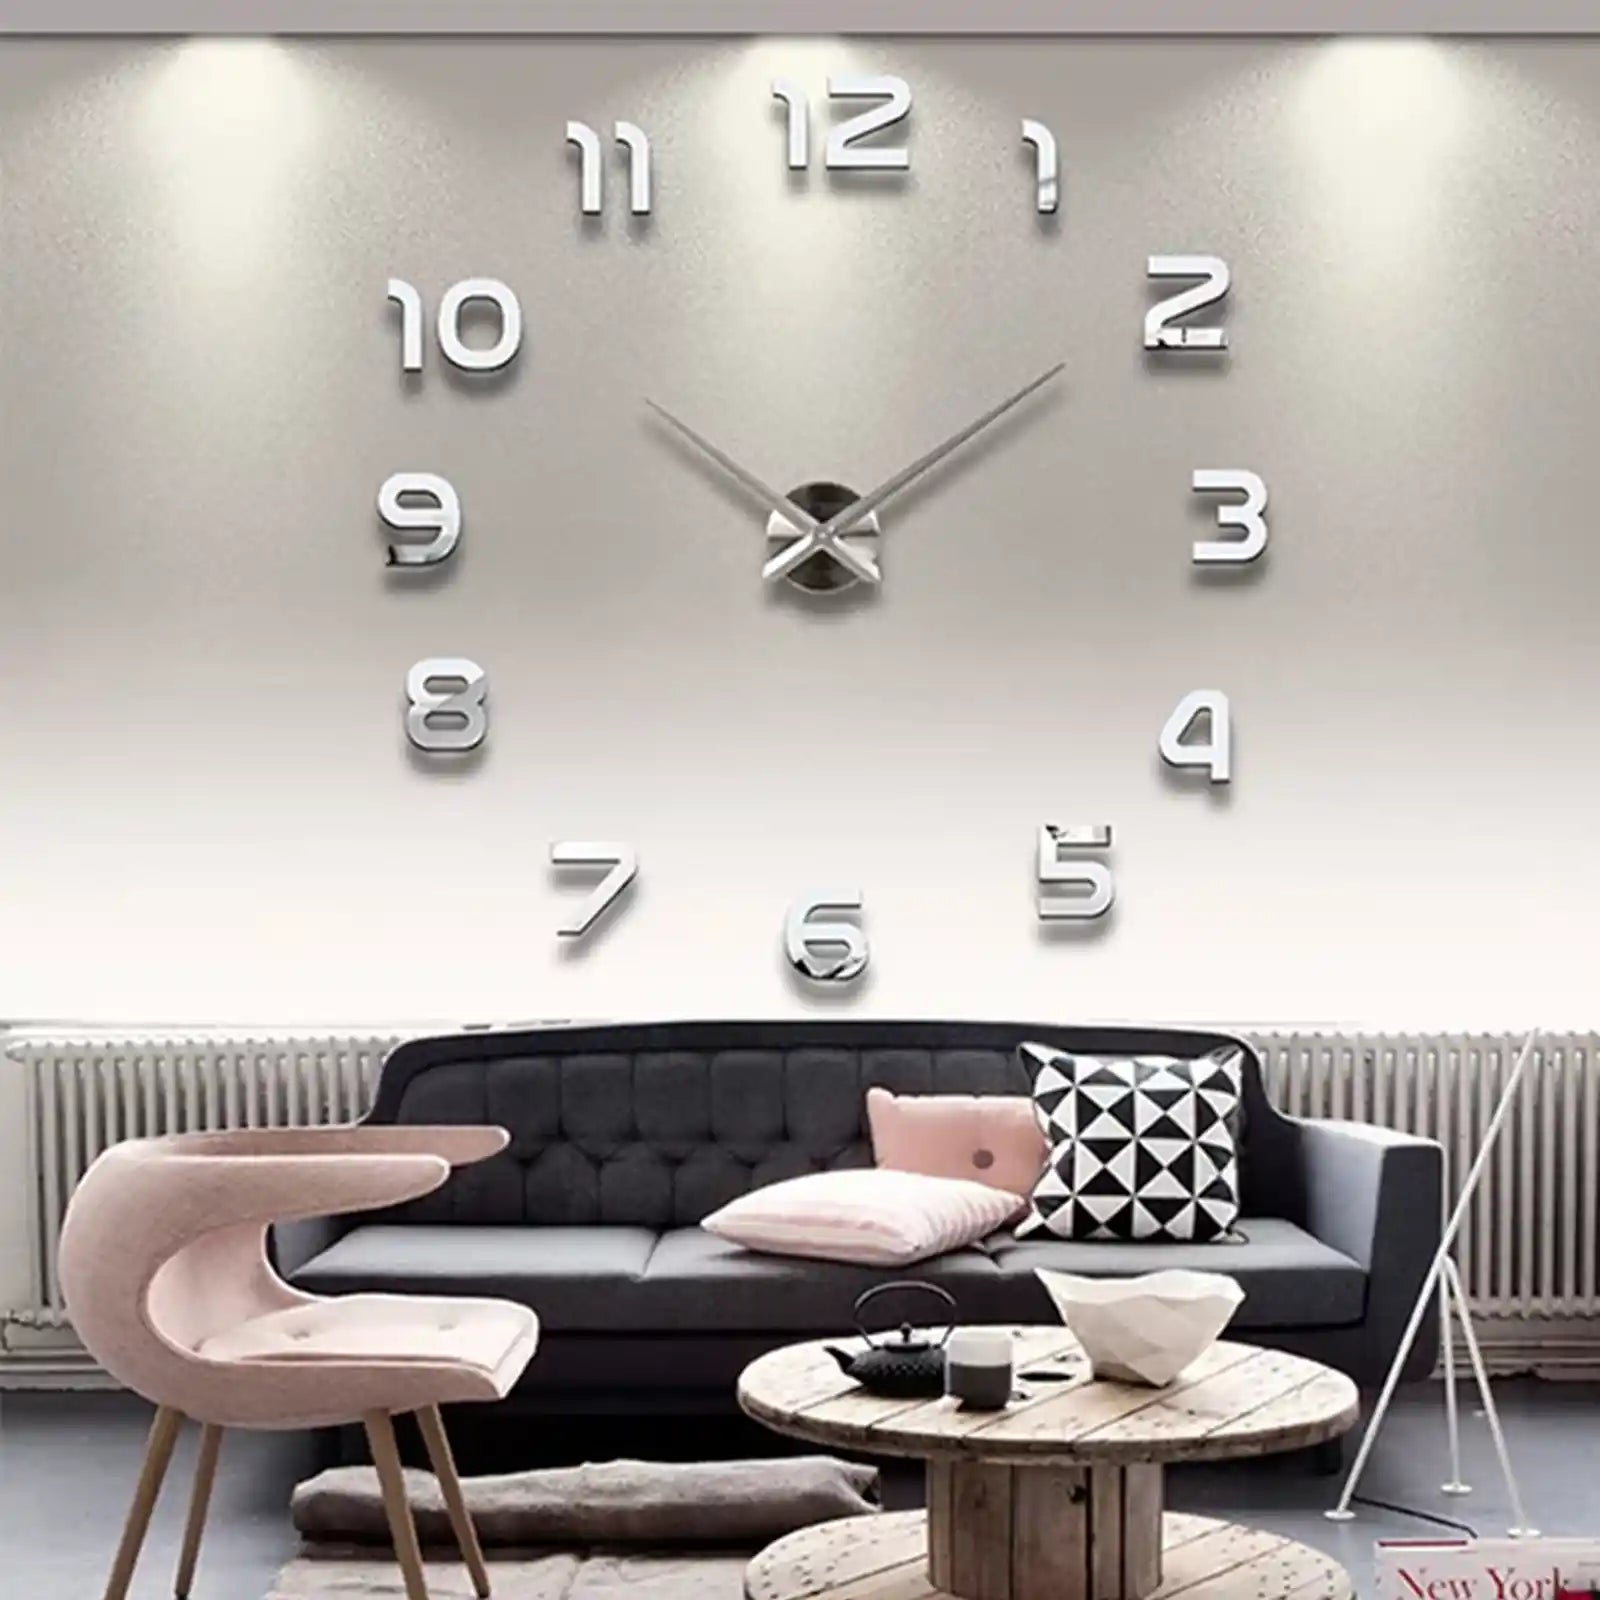 Large Number Wall Clock 3D Mirror Sticker Modern Home Office Decor Art Decal Silver